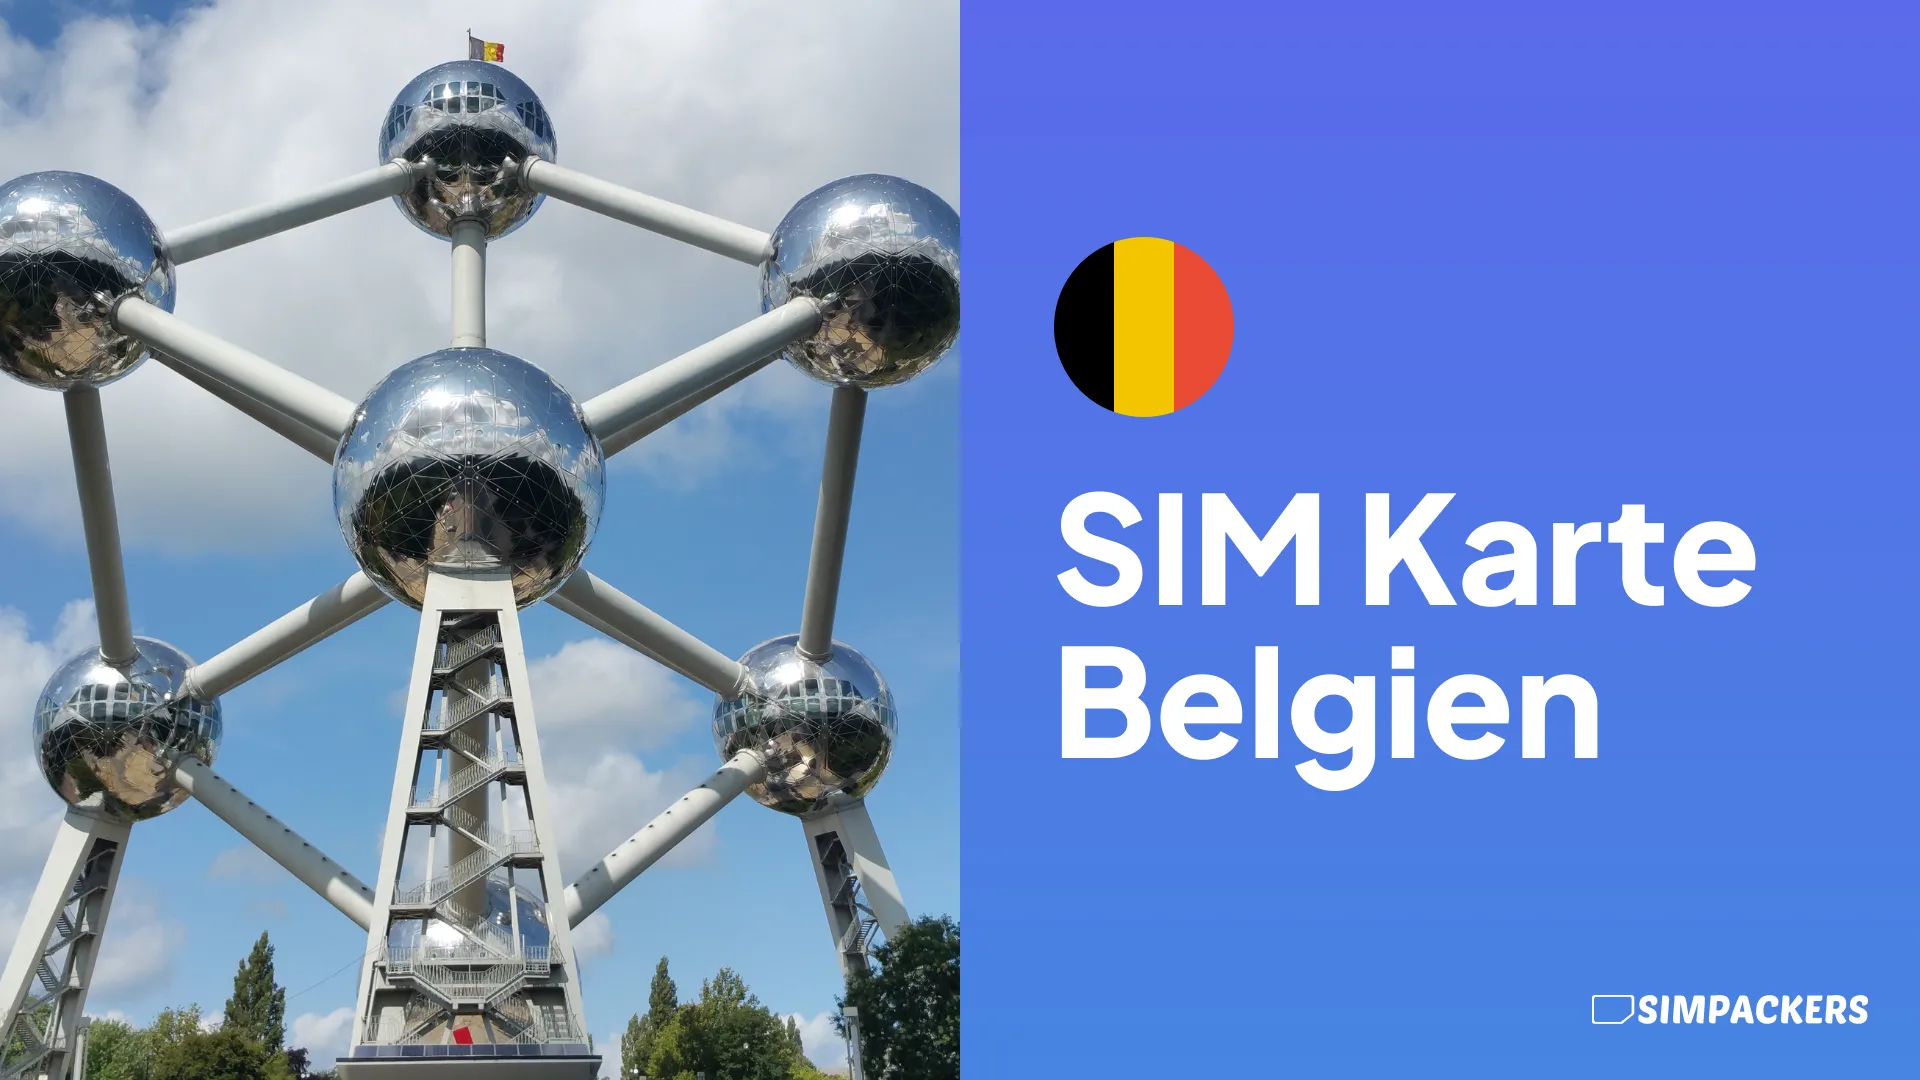 DE/FEATURED_IMAGES/sim-karte-belgien.webp